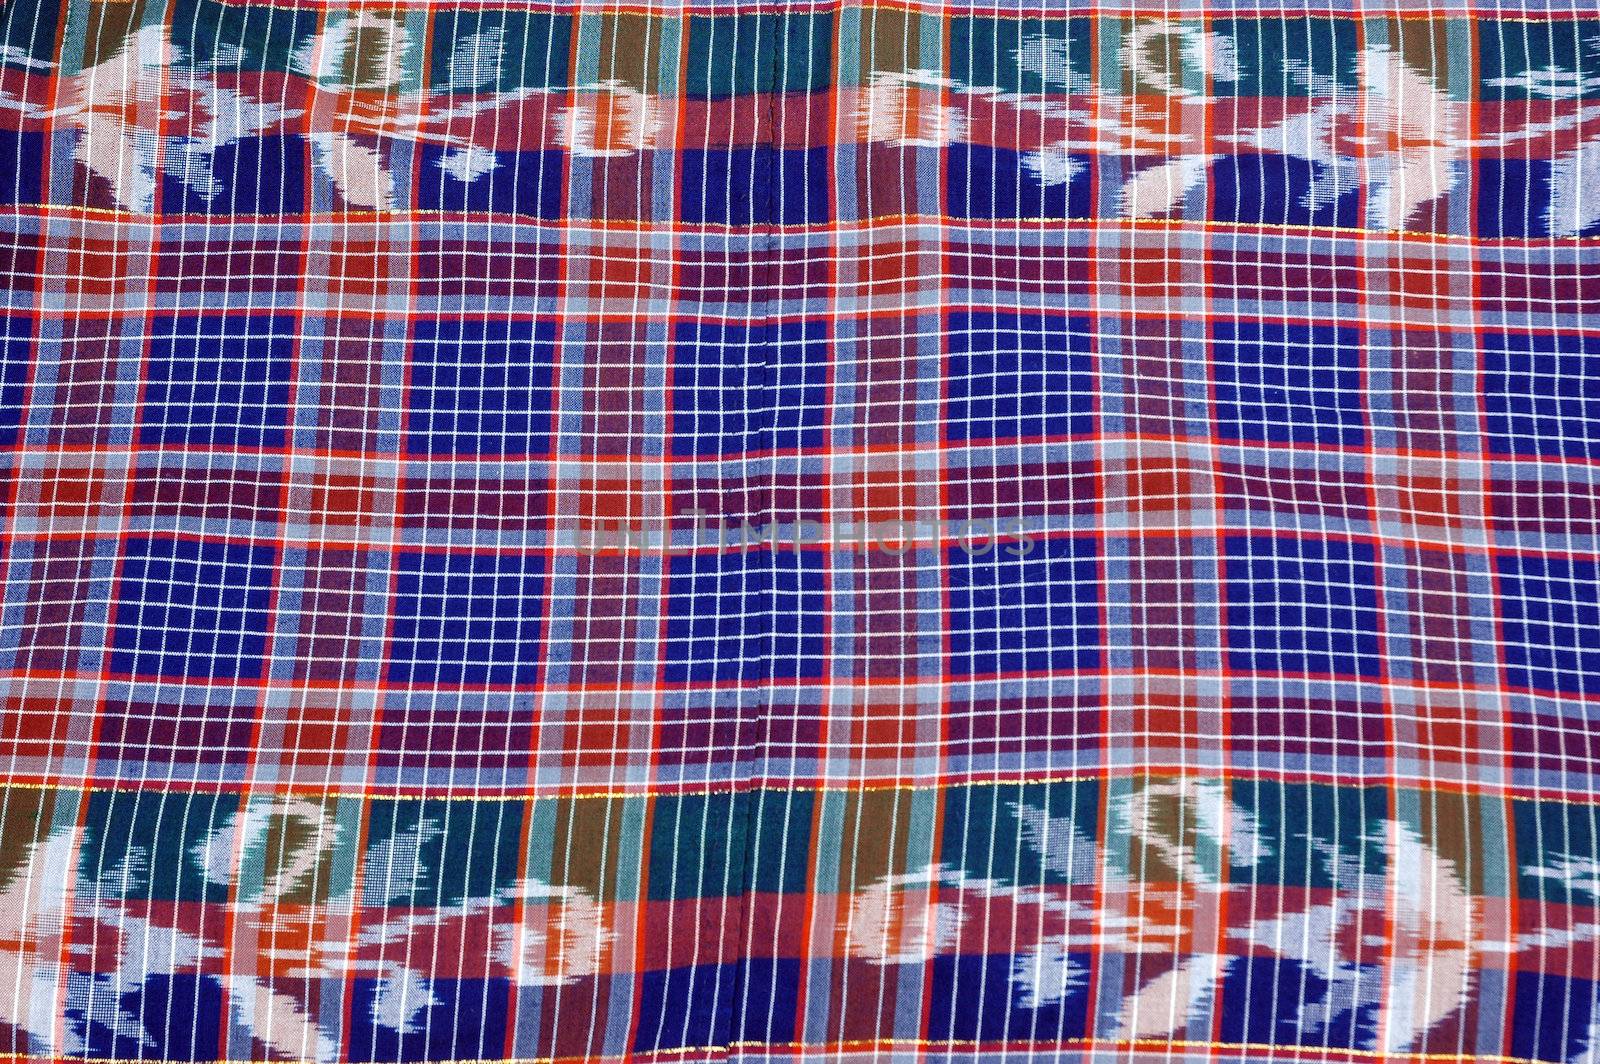 Indonesian fabric design details by antonihalim